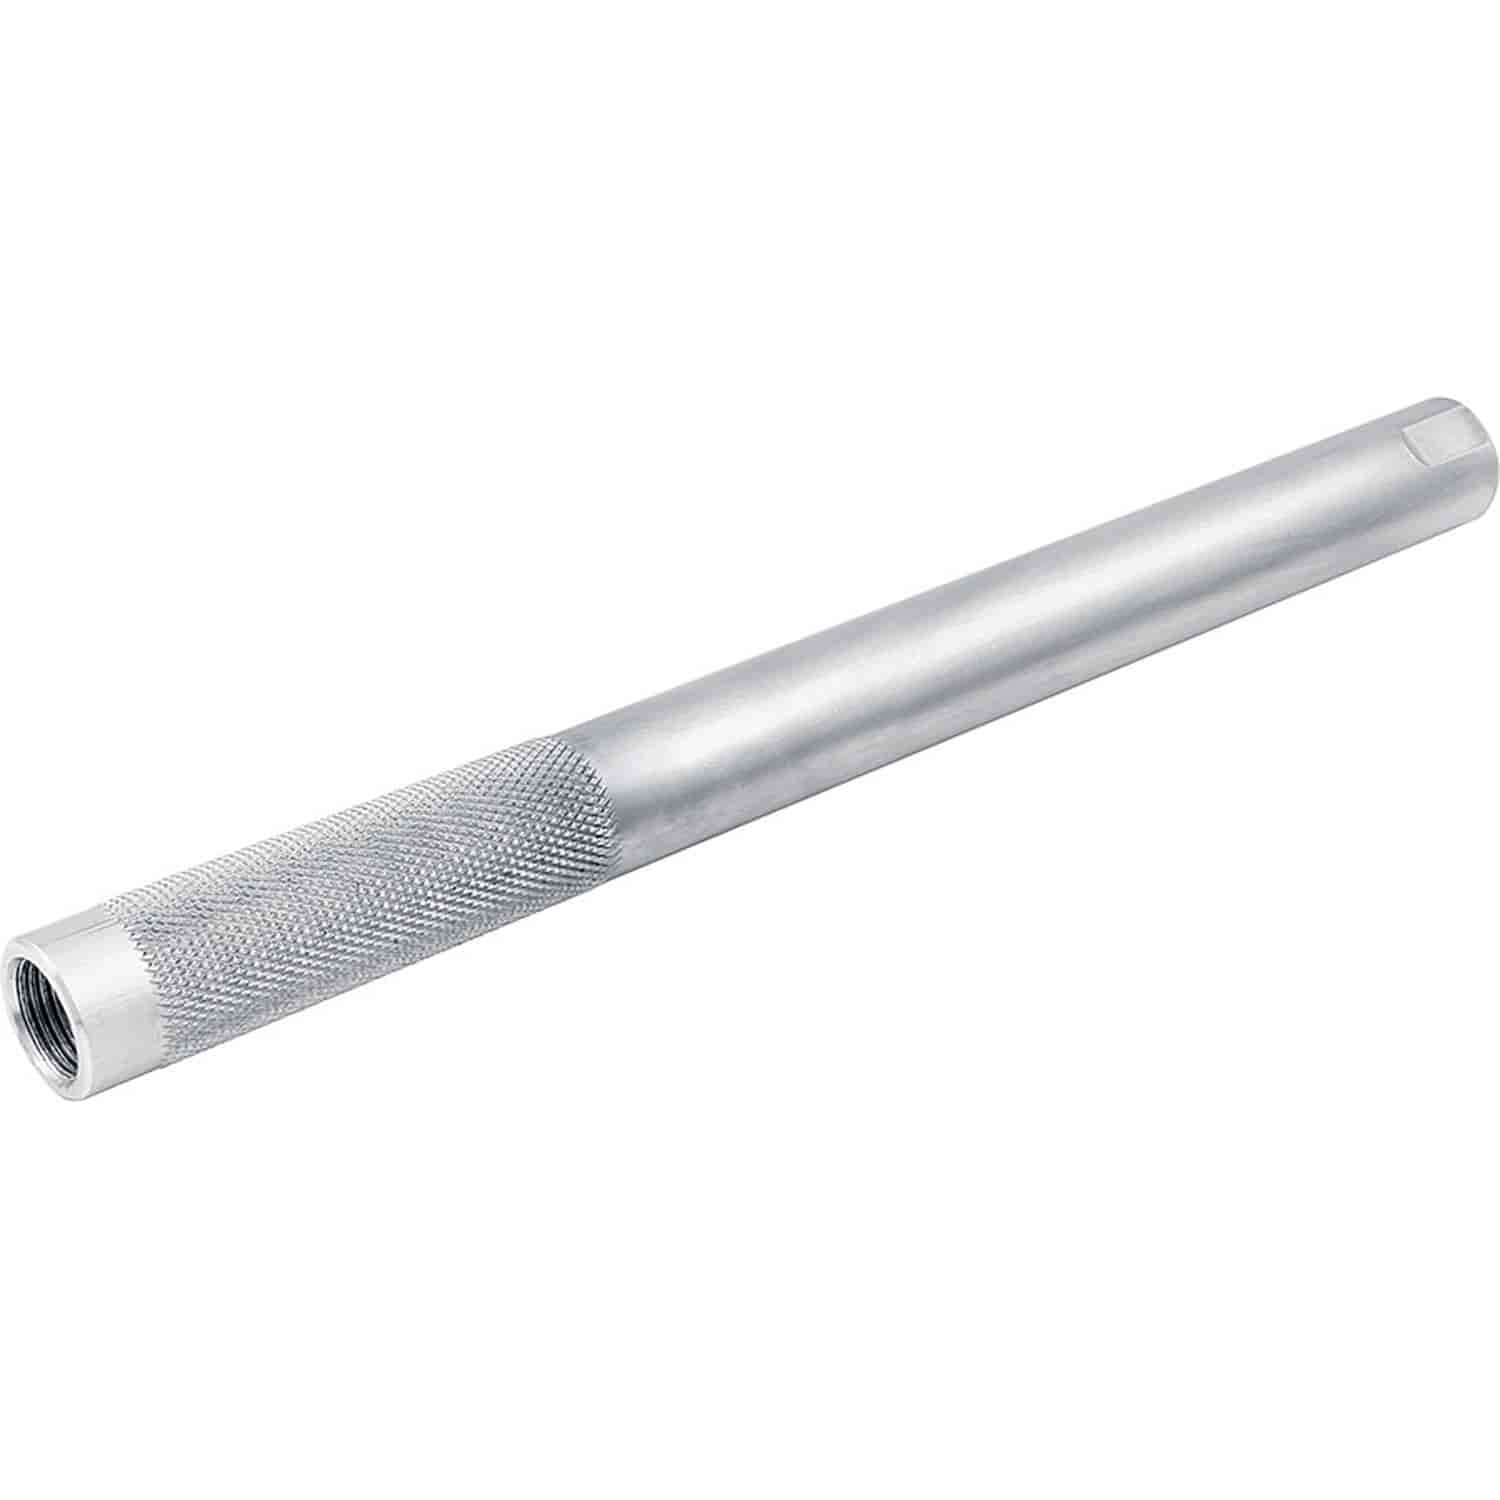 Swedged Aluminum Tie Rod Tube Length: 13"